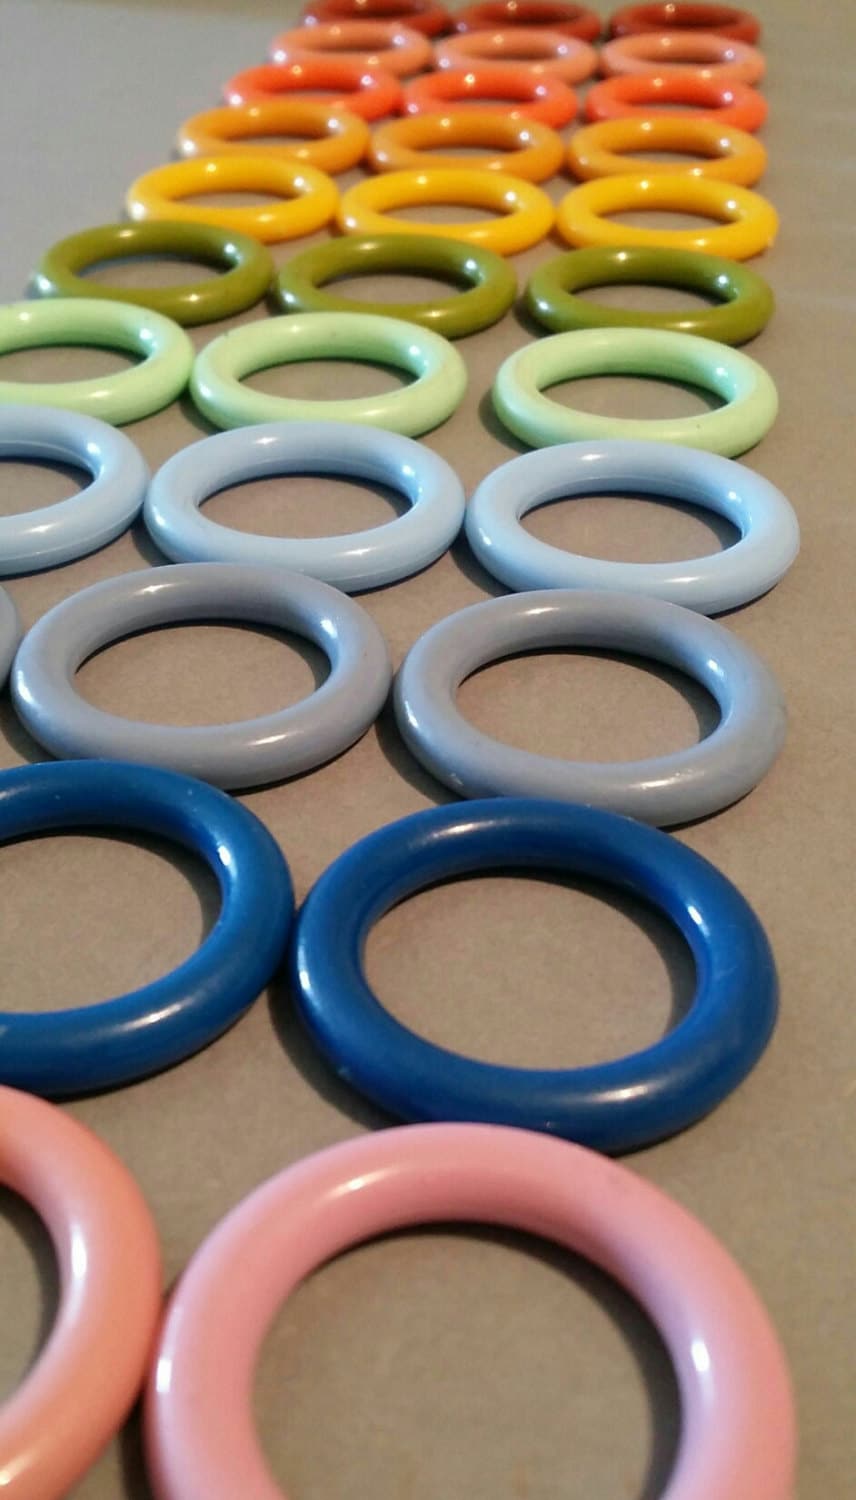 Lot of 33 Plastic Craft Rings 1 1/2 inch Macrame Rings